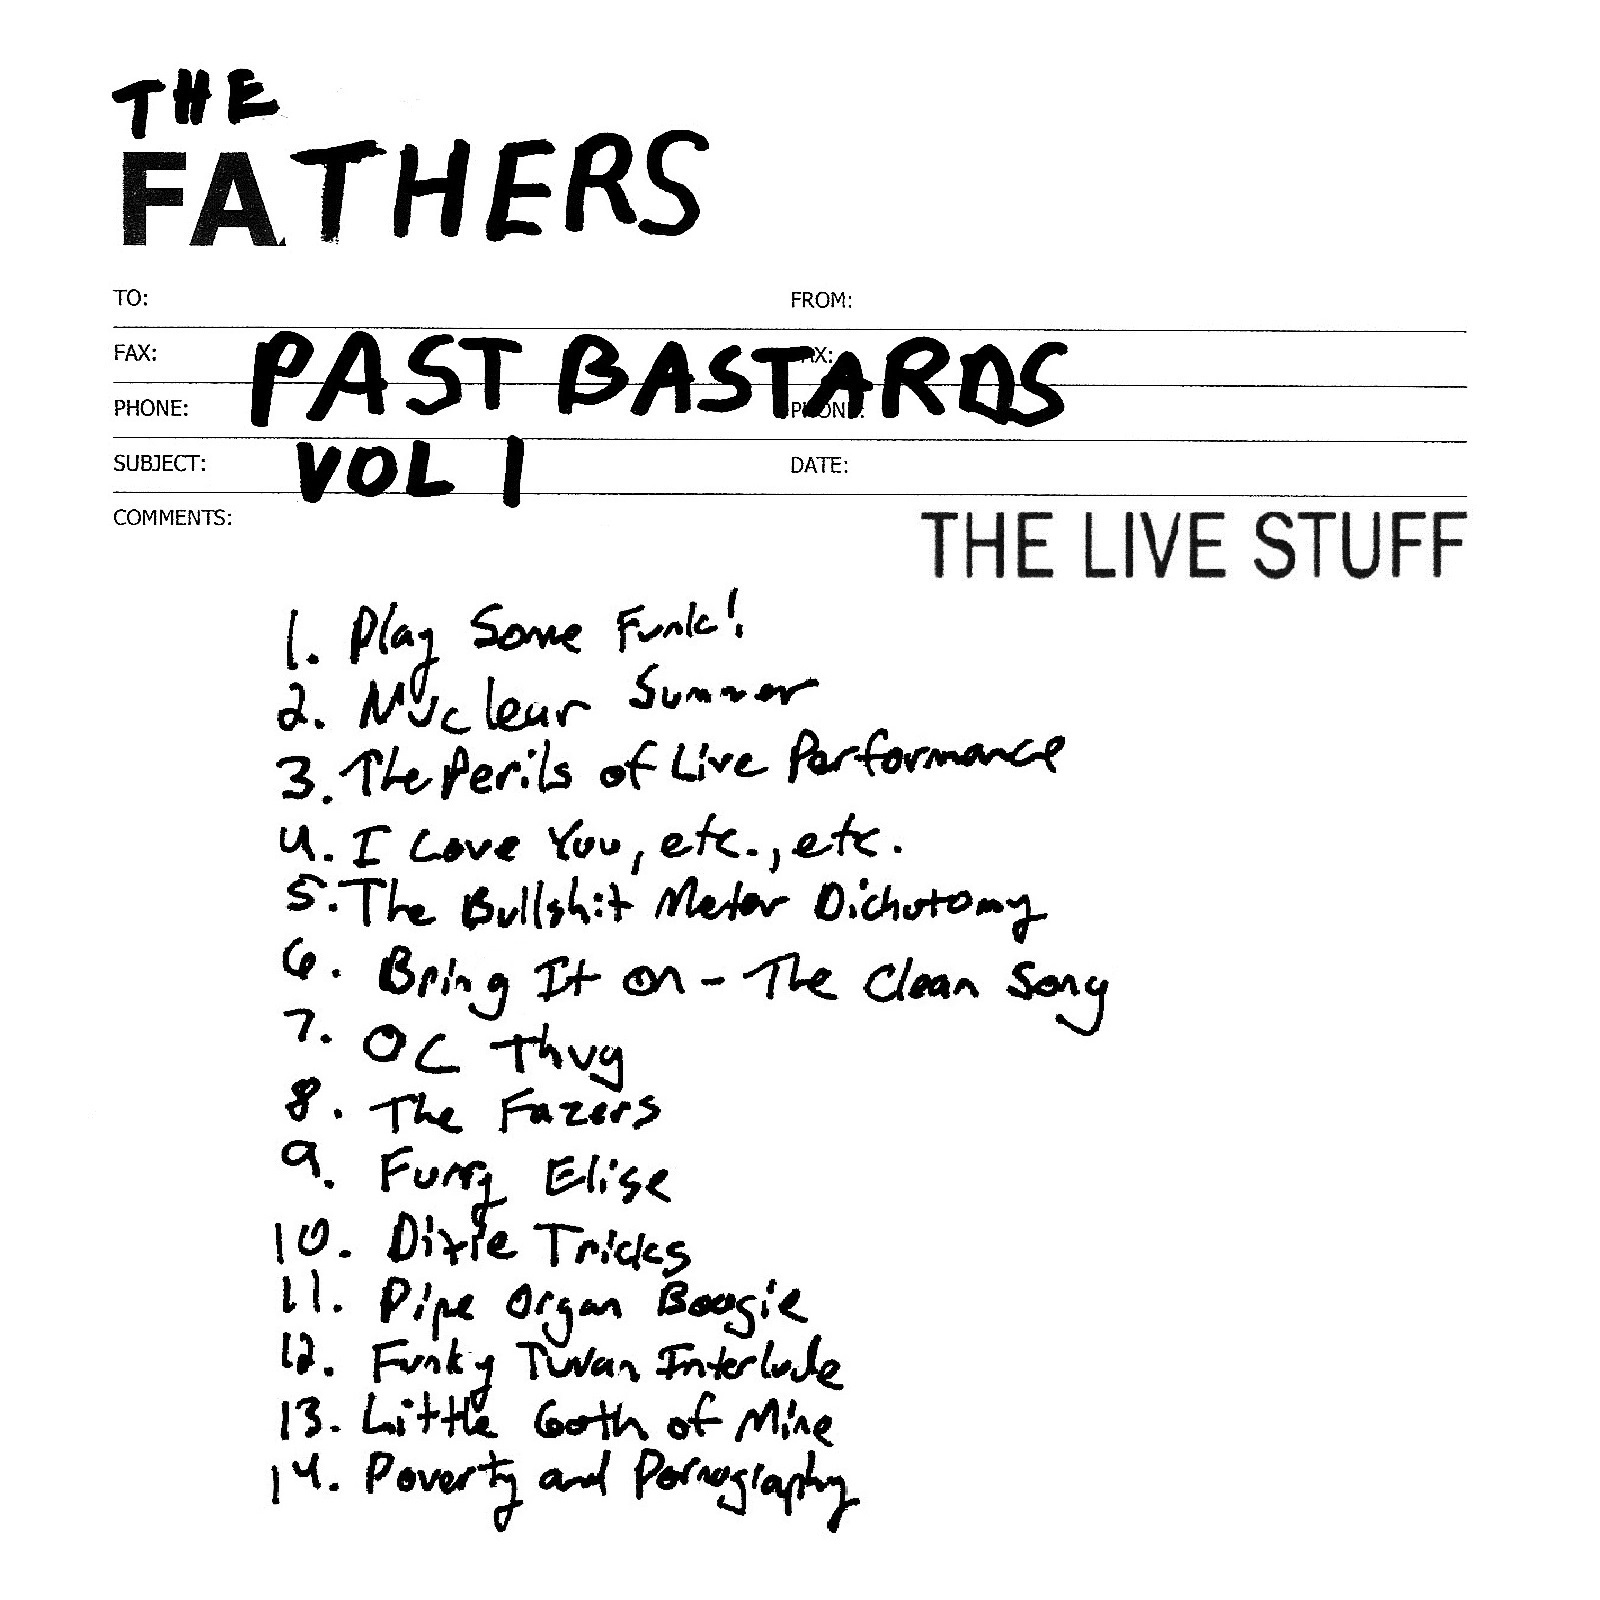 The Fathers - Past Bastards Vol I back - image missing